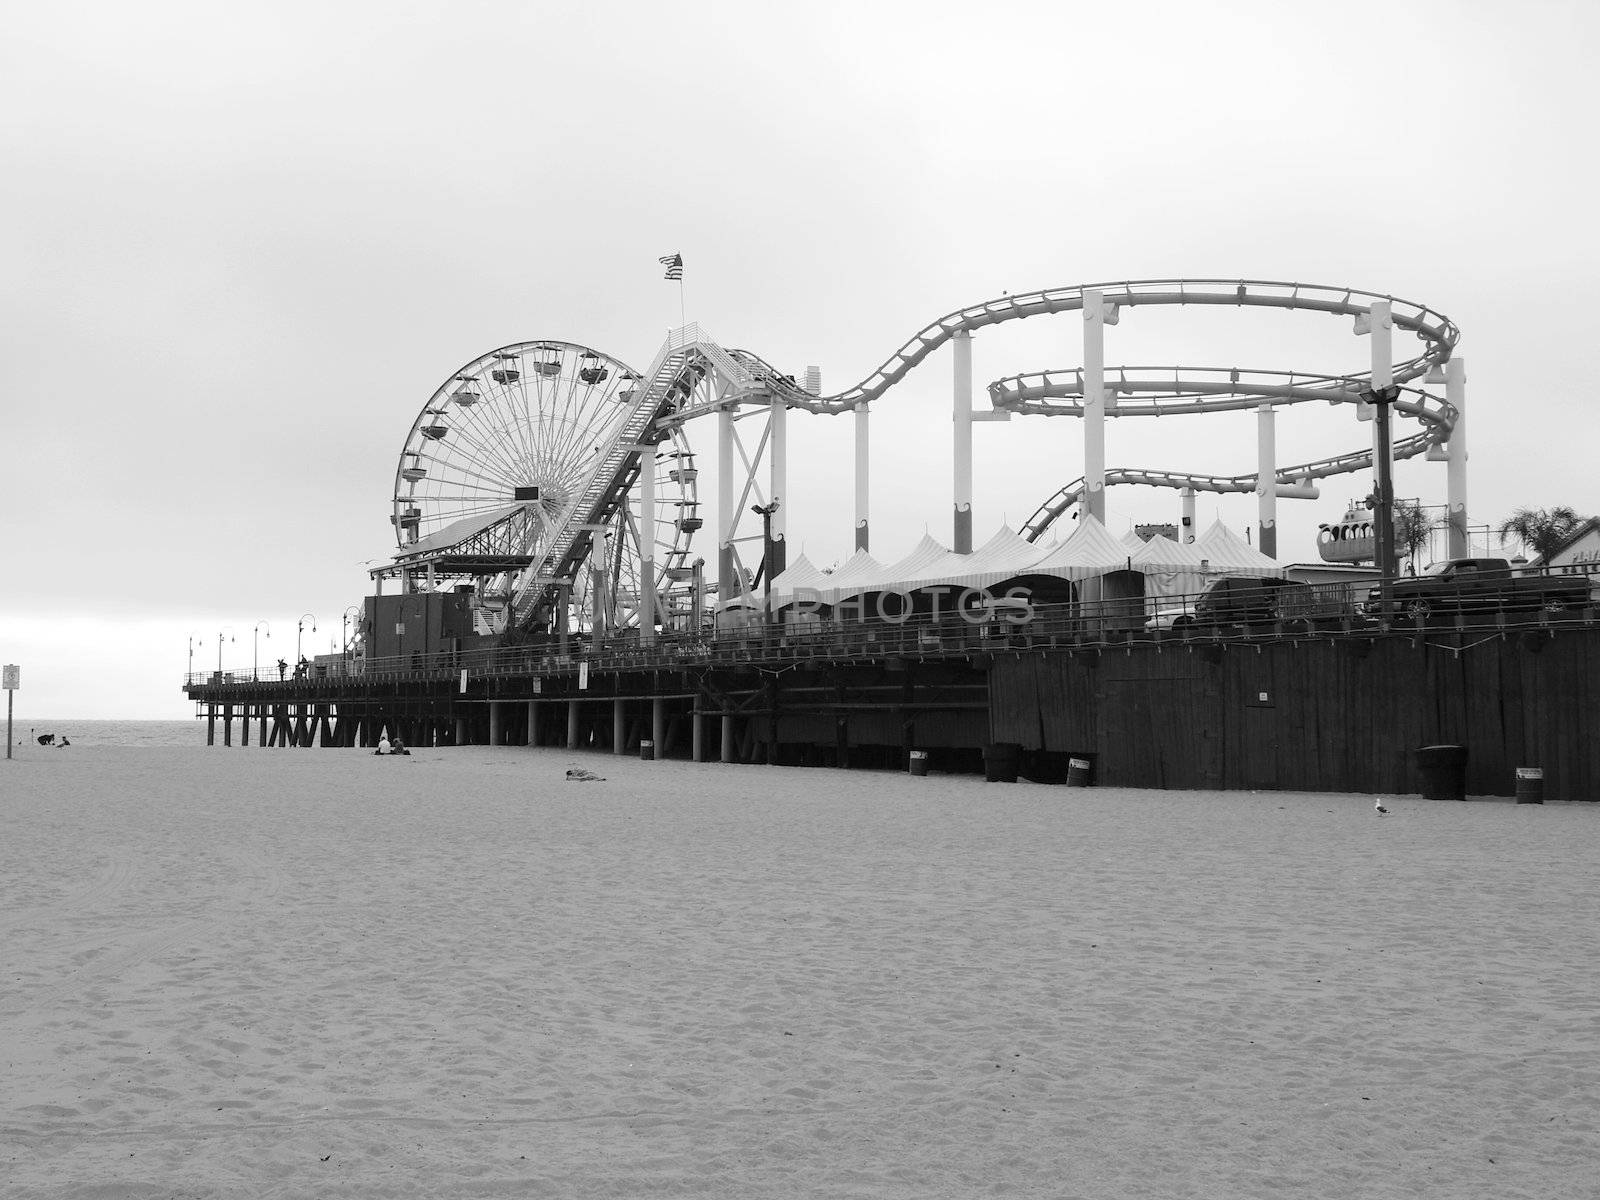 LOS ANGELES - SEPTEMBER 17: Santa Monica Pier in Los Angeles, CA on September 17, 2011.  The long, narrow Municipal Pier opened September 9, 1909.